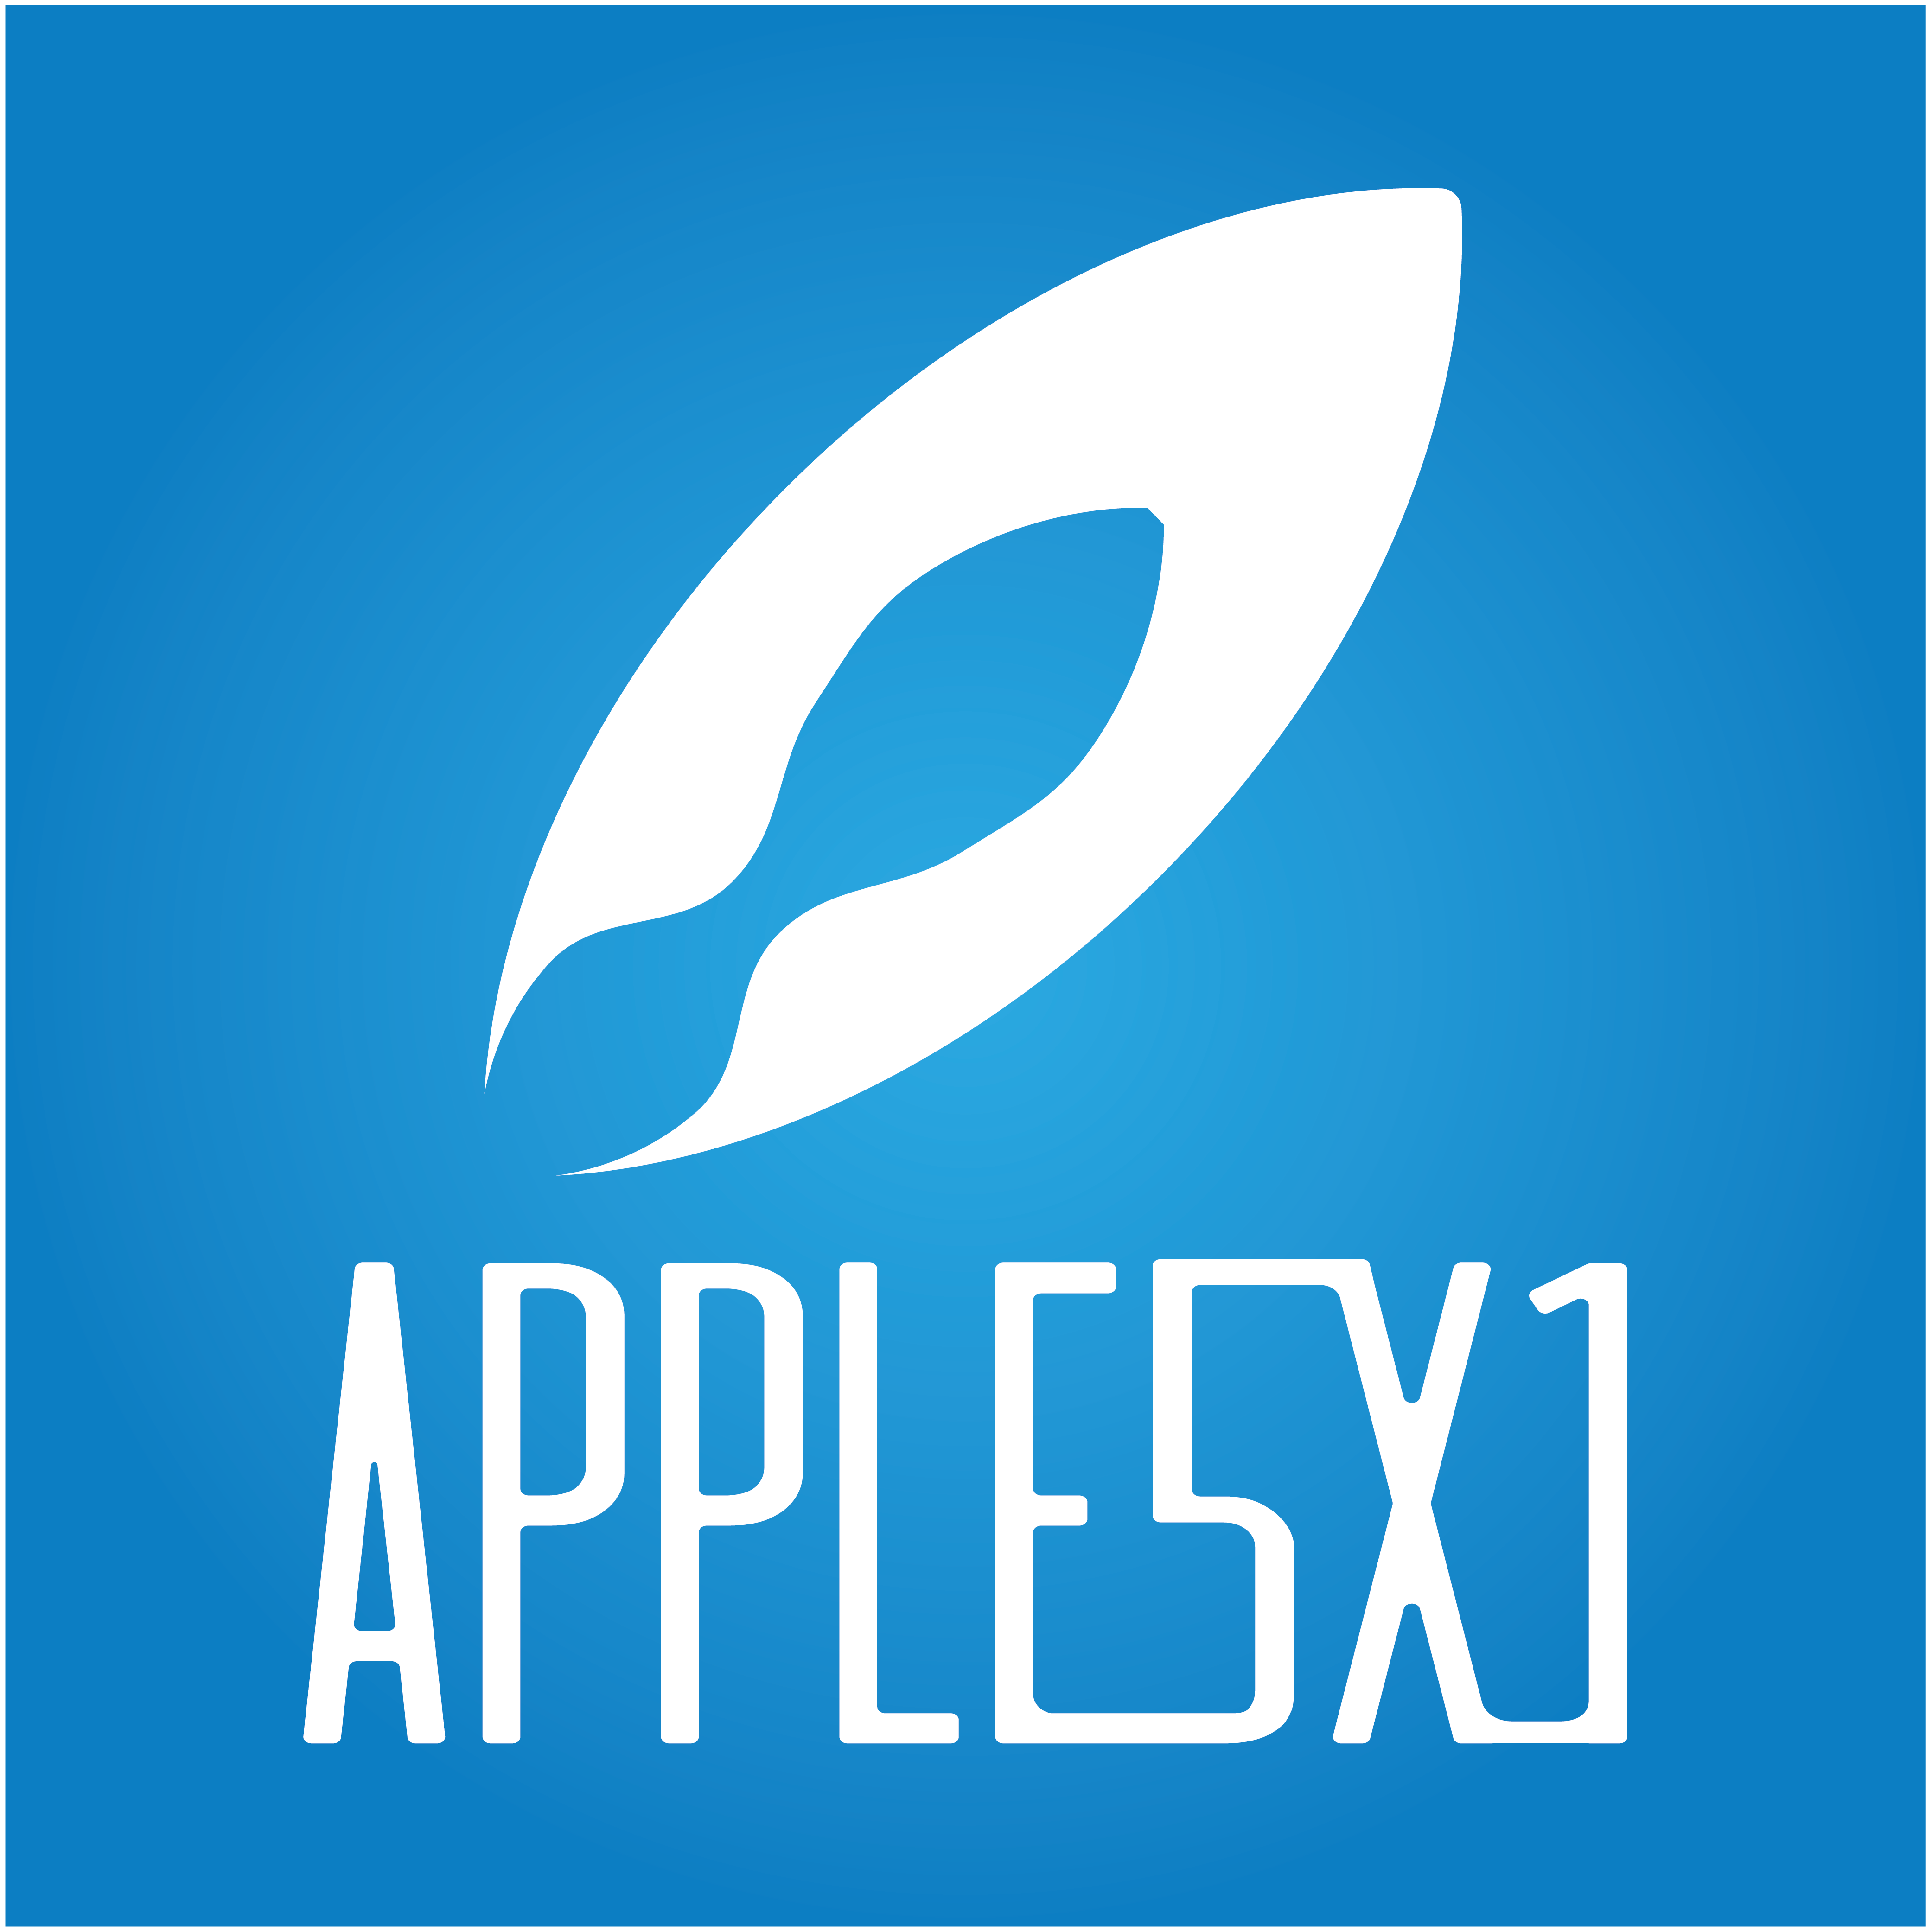 Apple5x1 - nuevo logo 2018